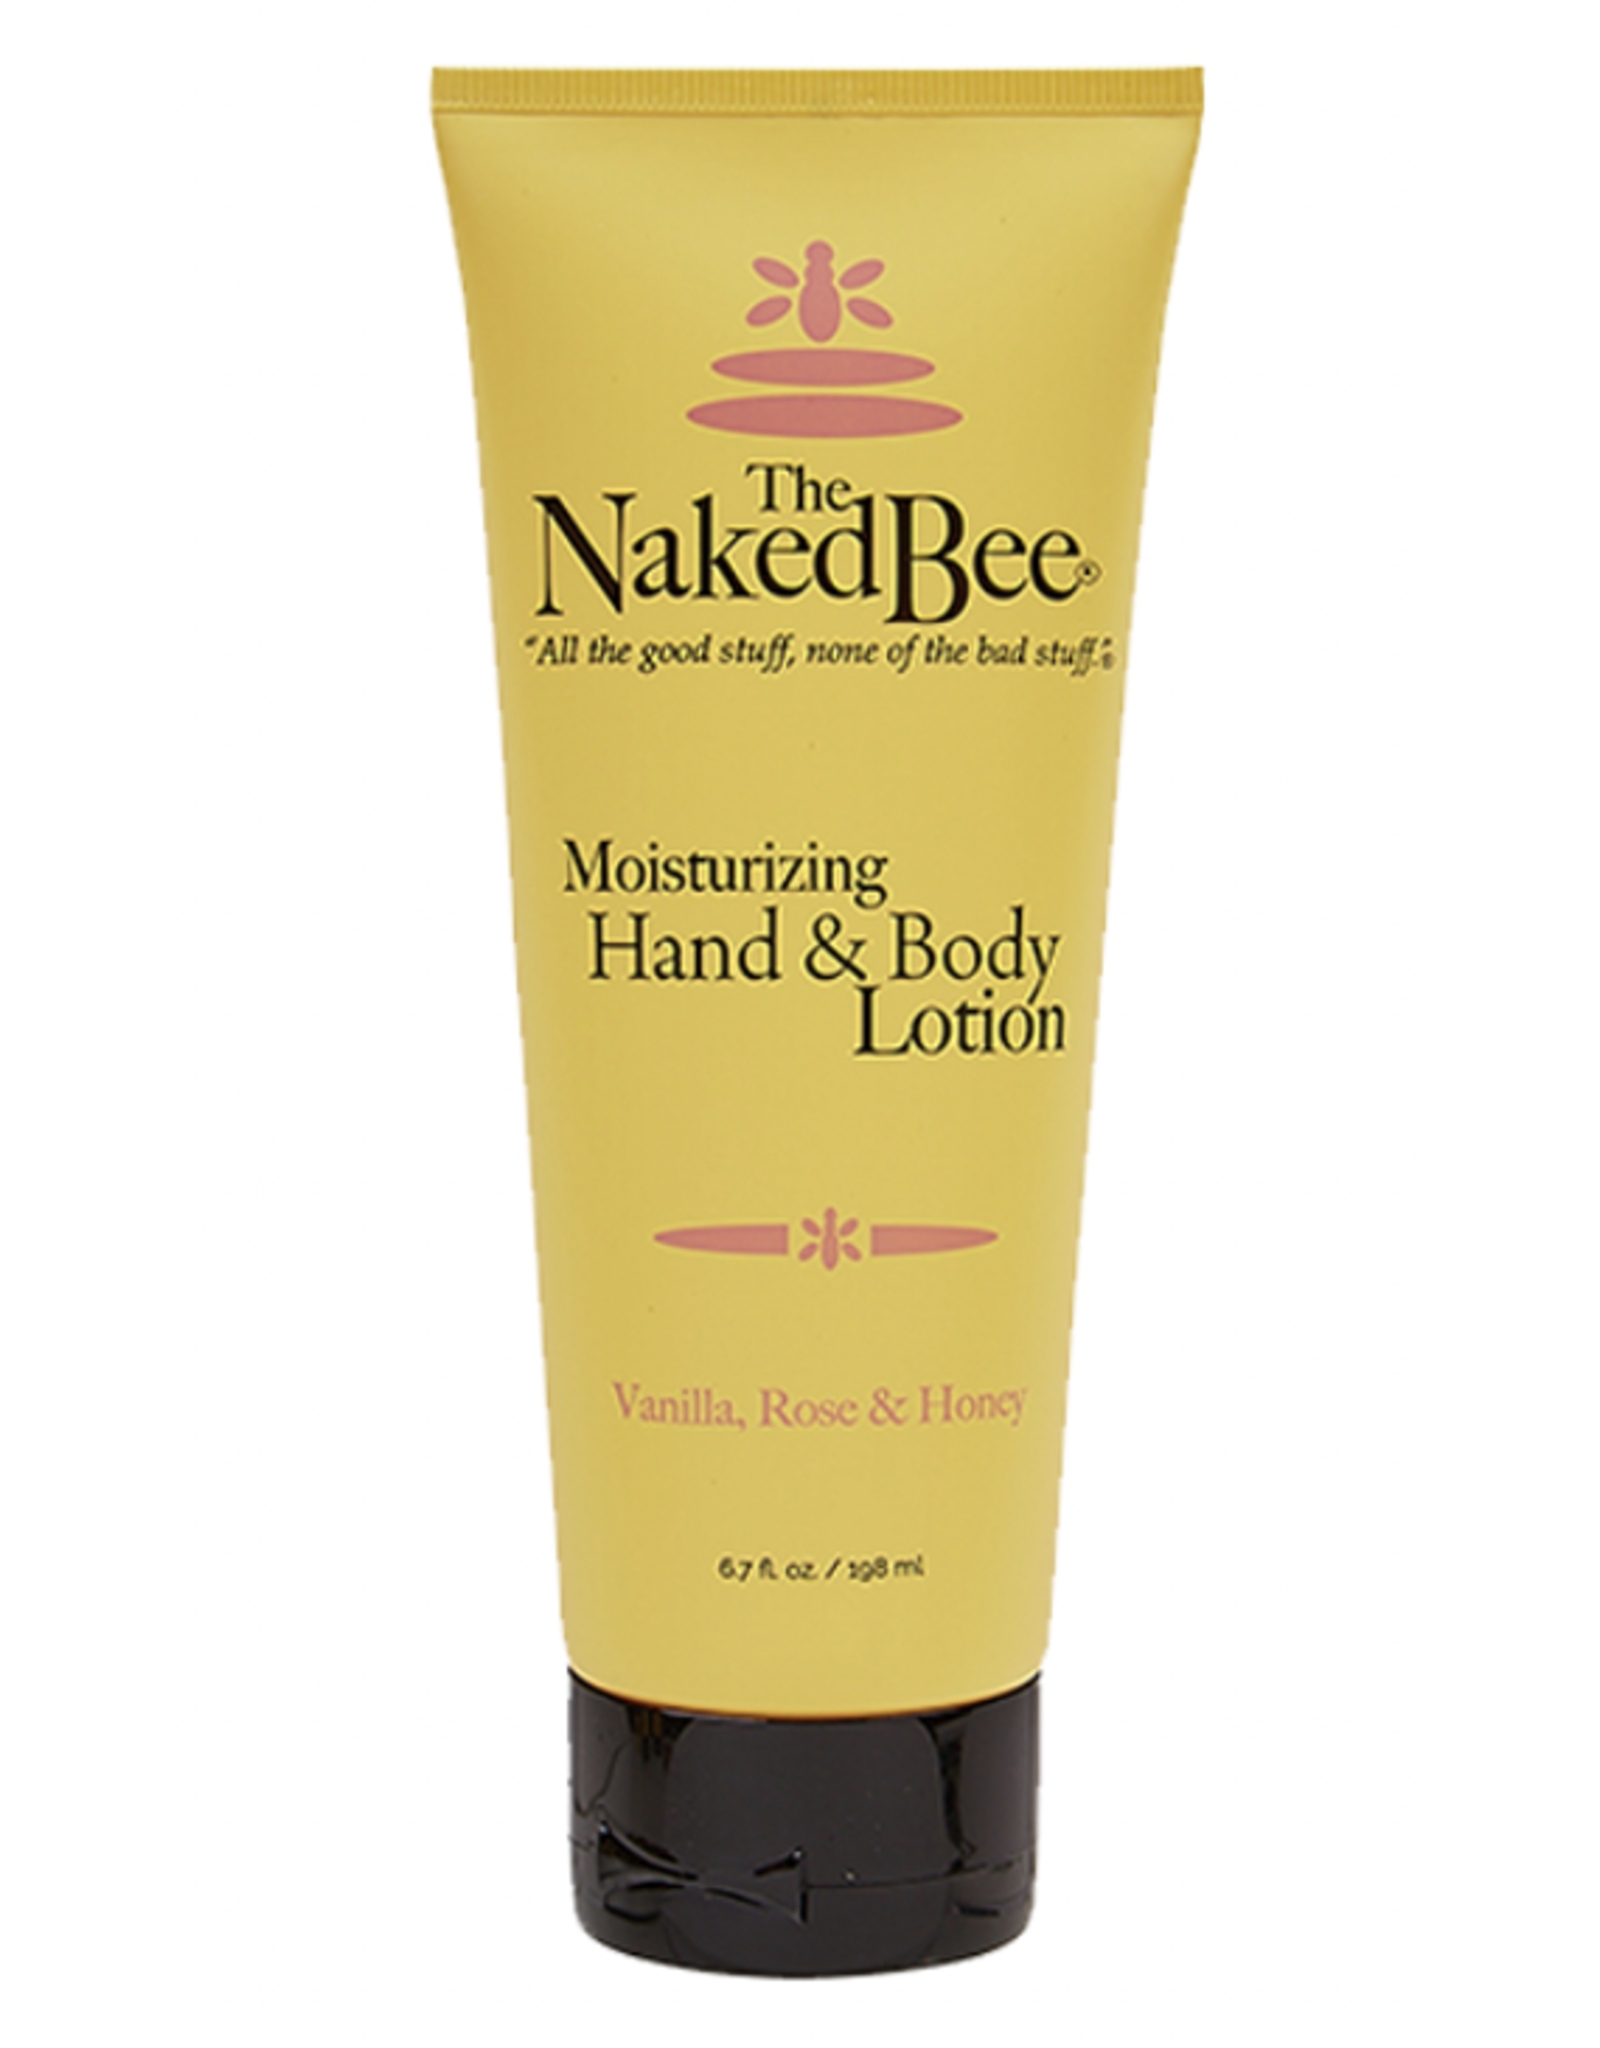 The Naked Bee The Naked Bee - Vanilla, Rose & Honey Hand & Body Lotion, 6.7oz